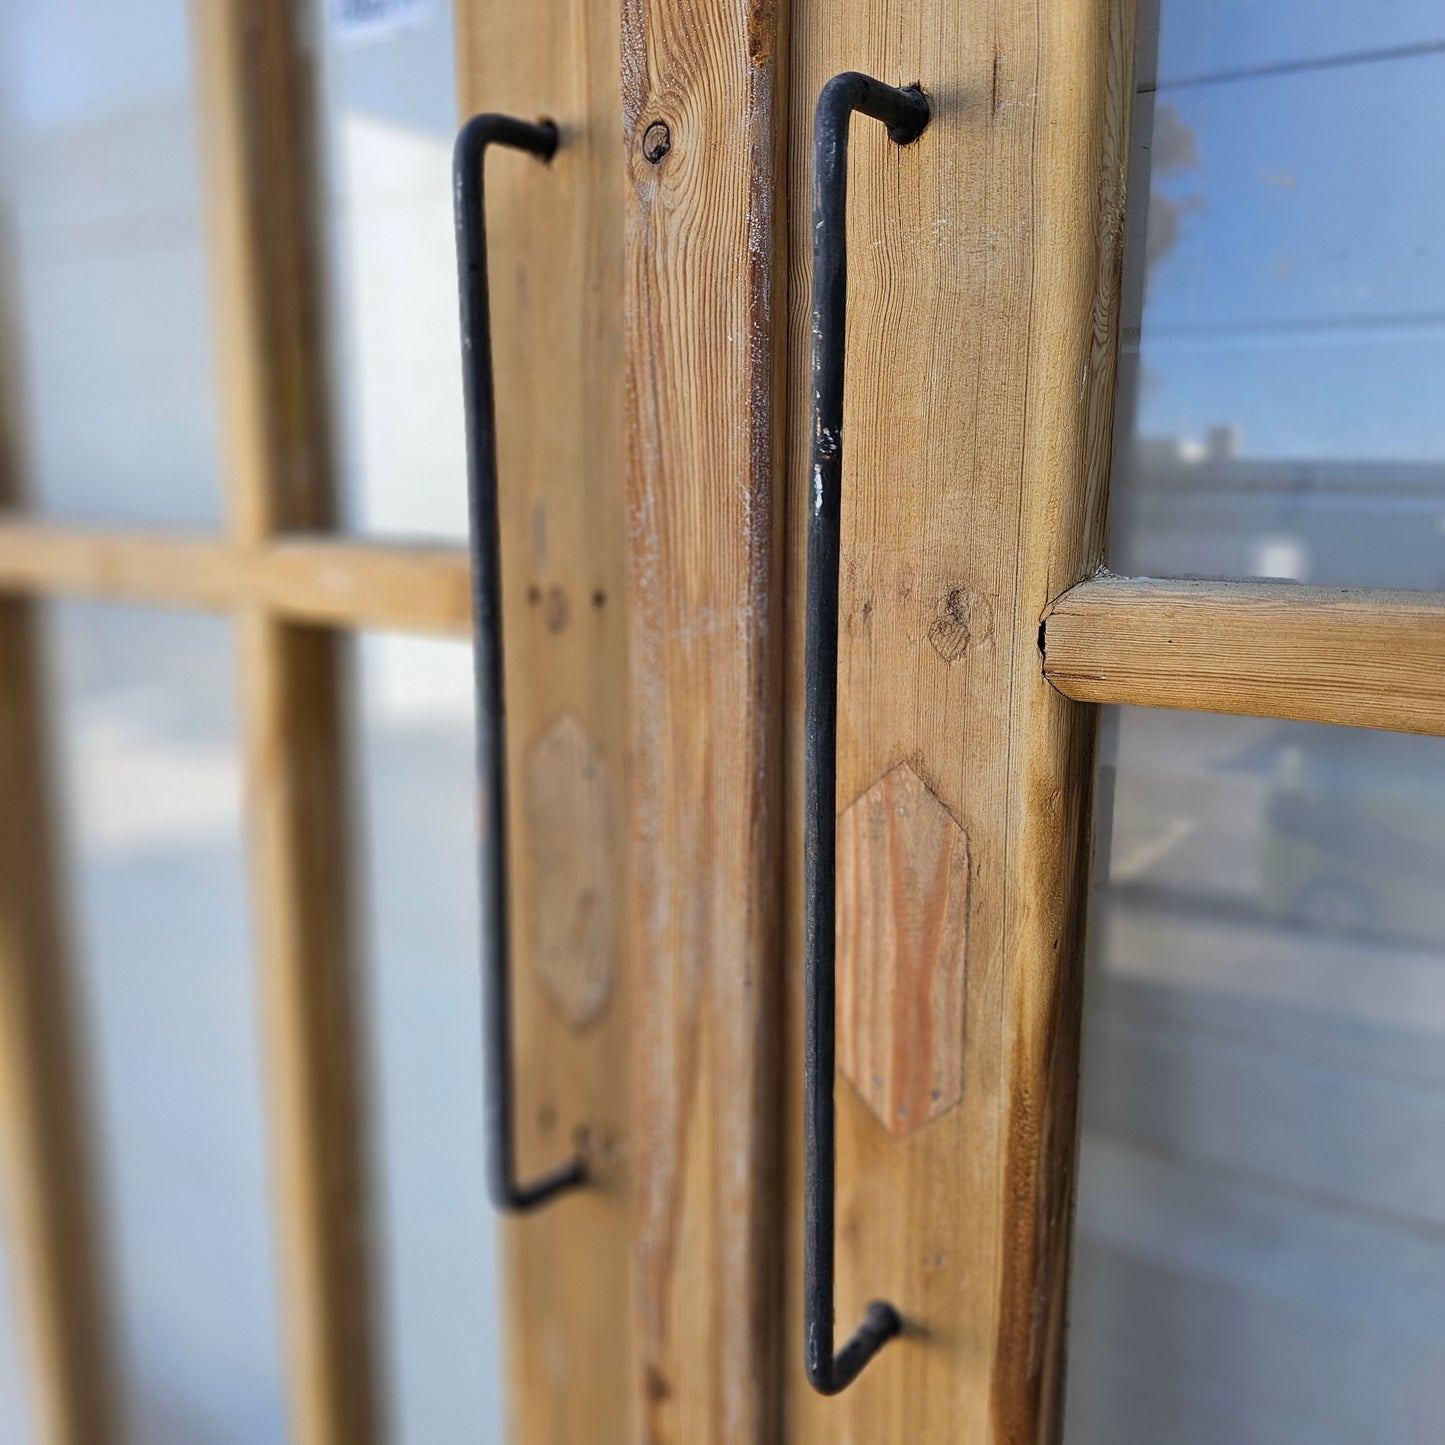 Pair of Wood French Doors w/24 Lites